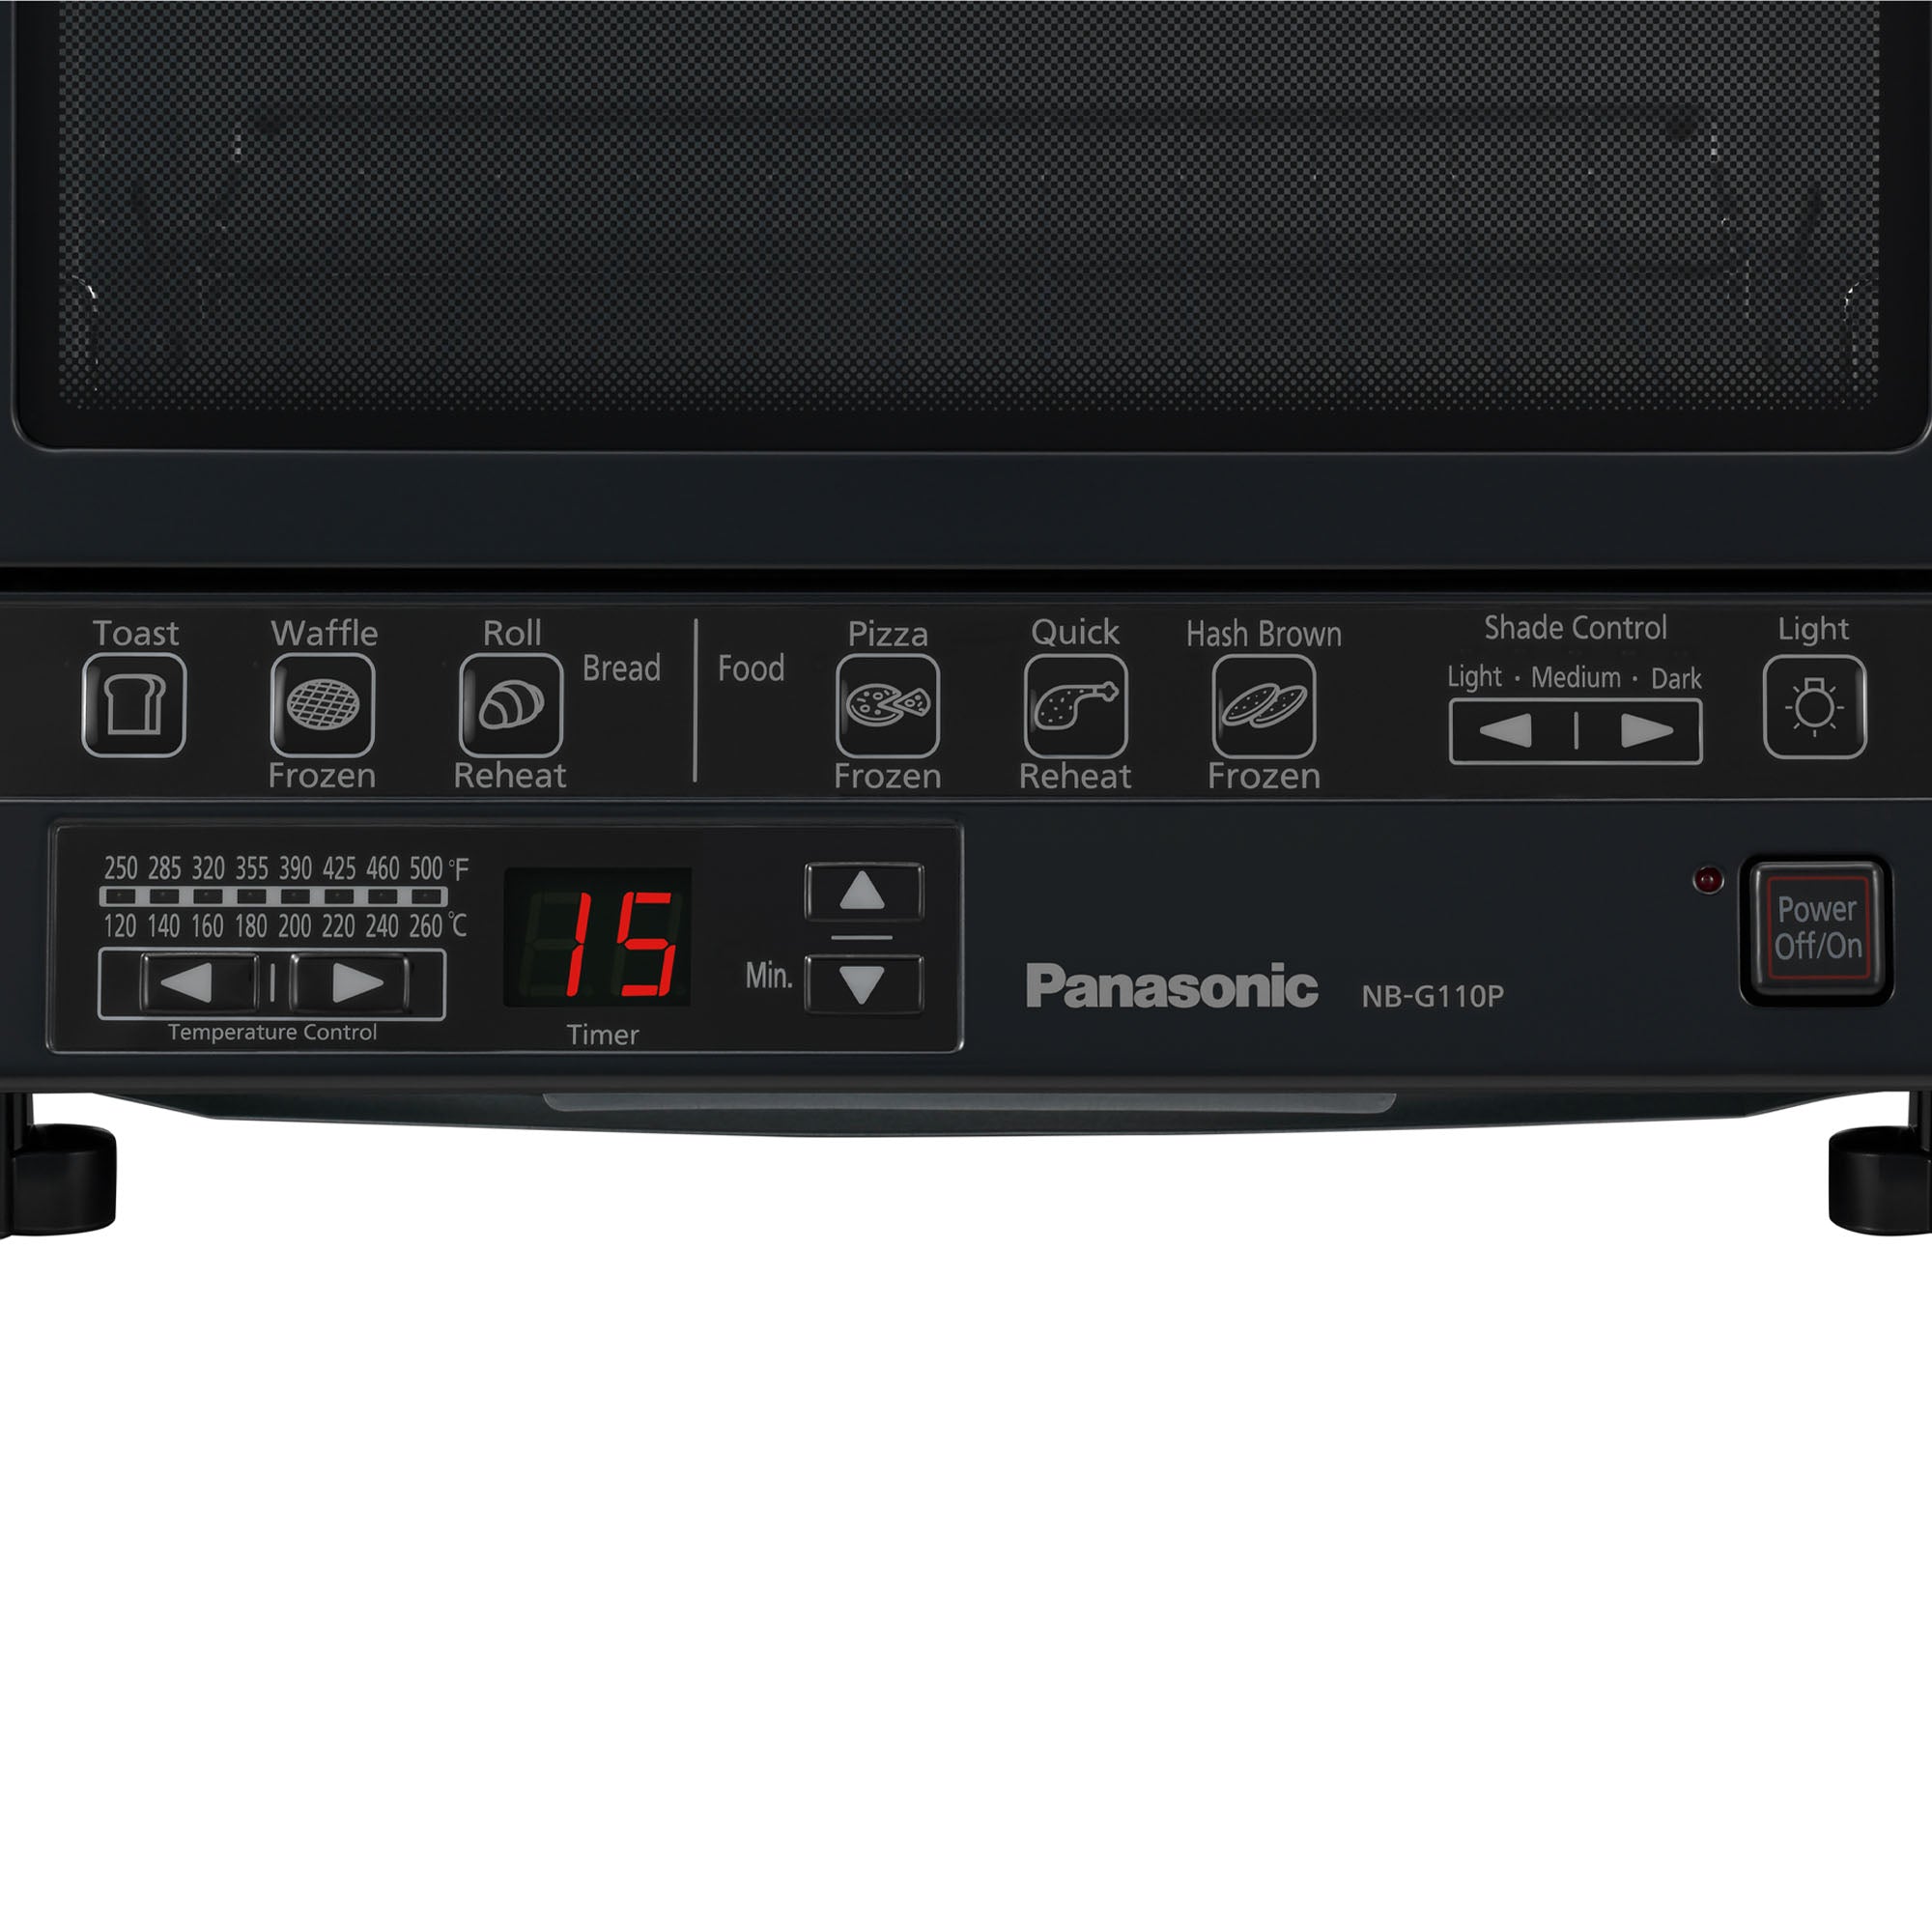 Panasonic FlashXpress 1300 Watt G110P 4 Slice Toaster Oven with Infrared  Heating